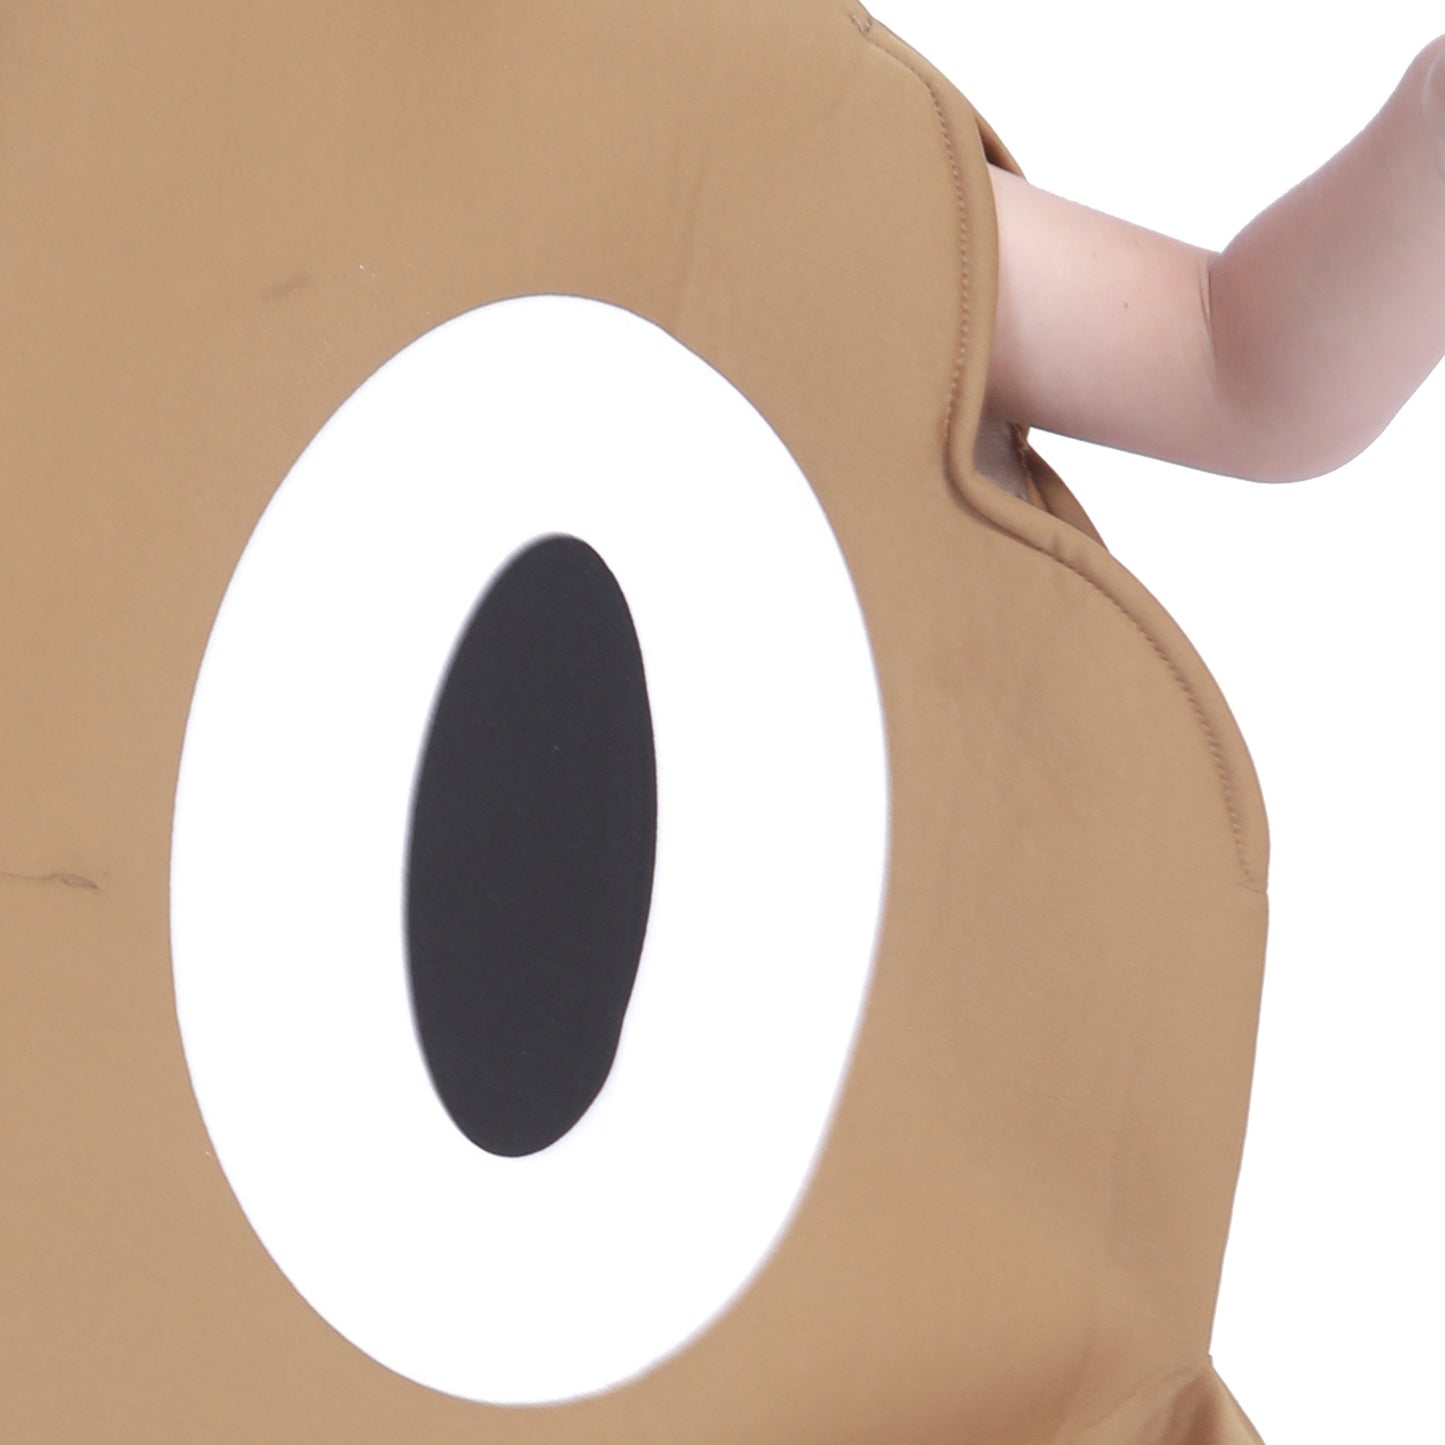 Children's Funny Creative Costumes Poop Shape